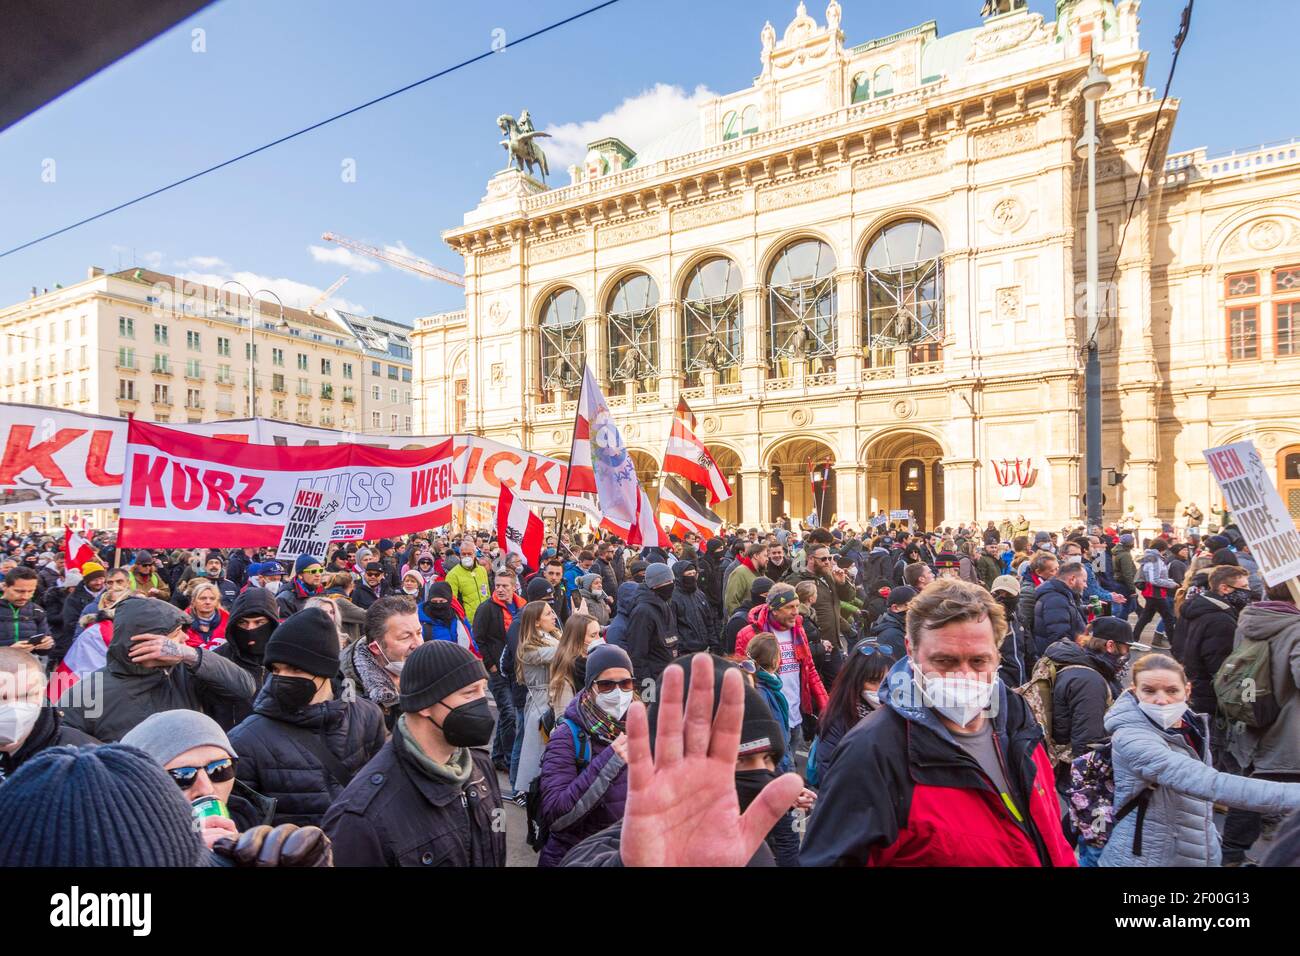 Wien, Vienna: Corona protest demonstration in front of opera Staatsoper, opponents of the corona measures march, banner 'Kurz muss weg' in 01. Old Tow Stock Photo